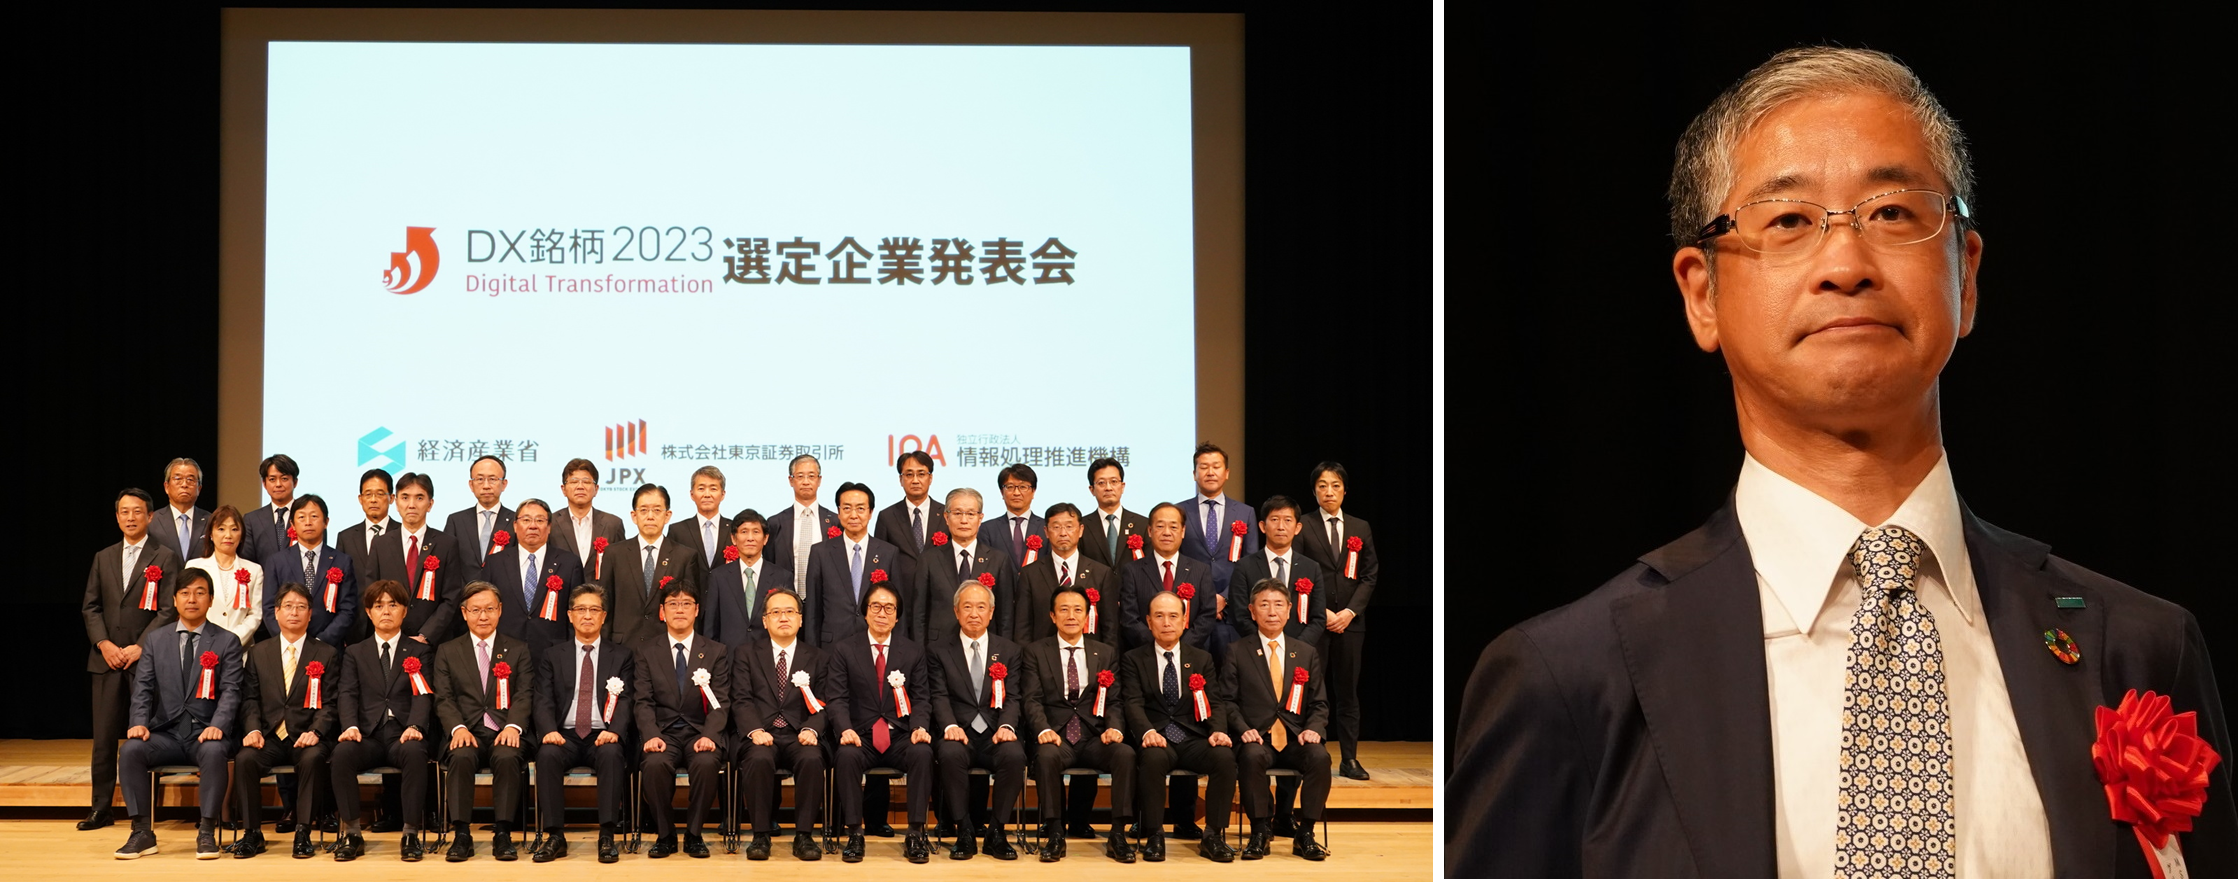 Photos of the presentation of DX Stocks 2023, MS&AD's Executive Officer & CDO: Tomoyuki Motoyama<br/>Provided by METI